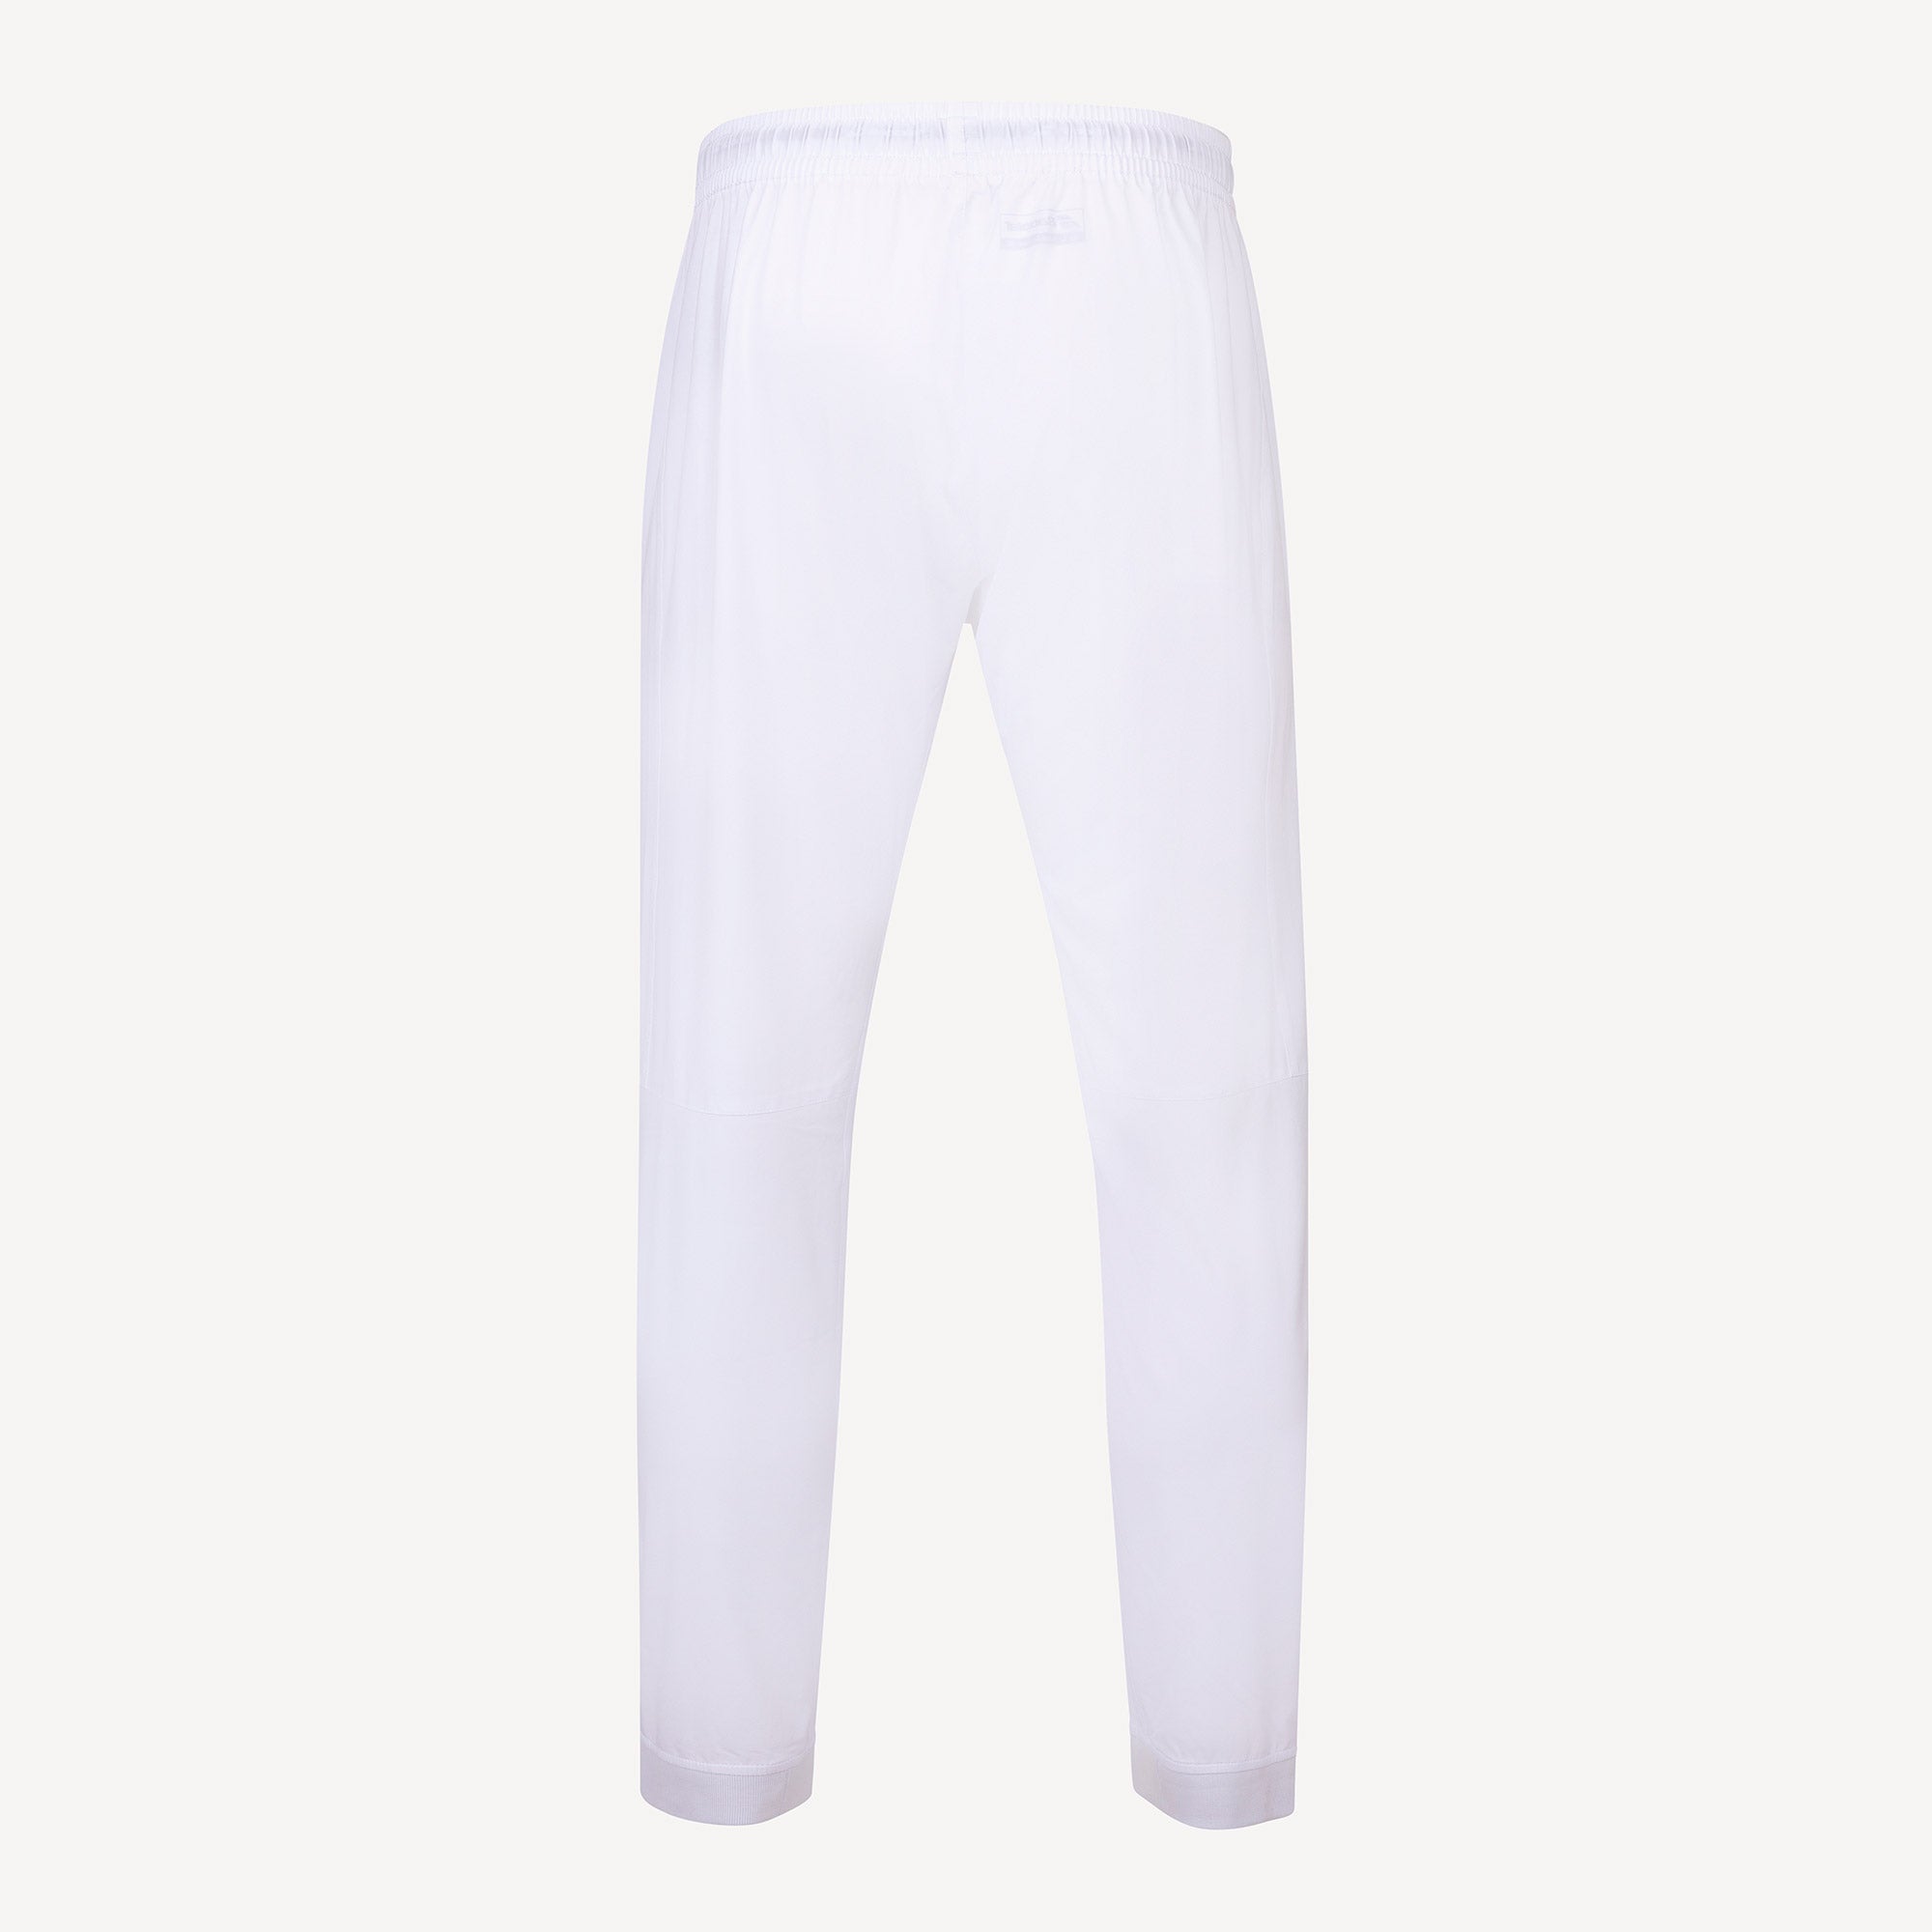 Babolat Play Club Men's Tennis Pants White (2)